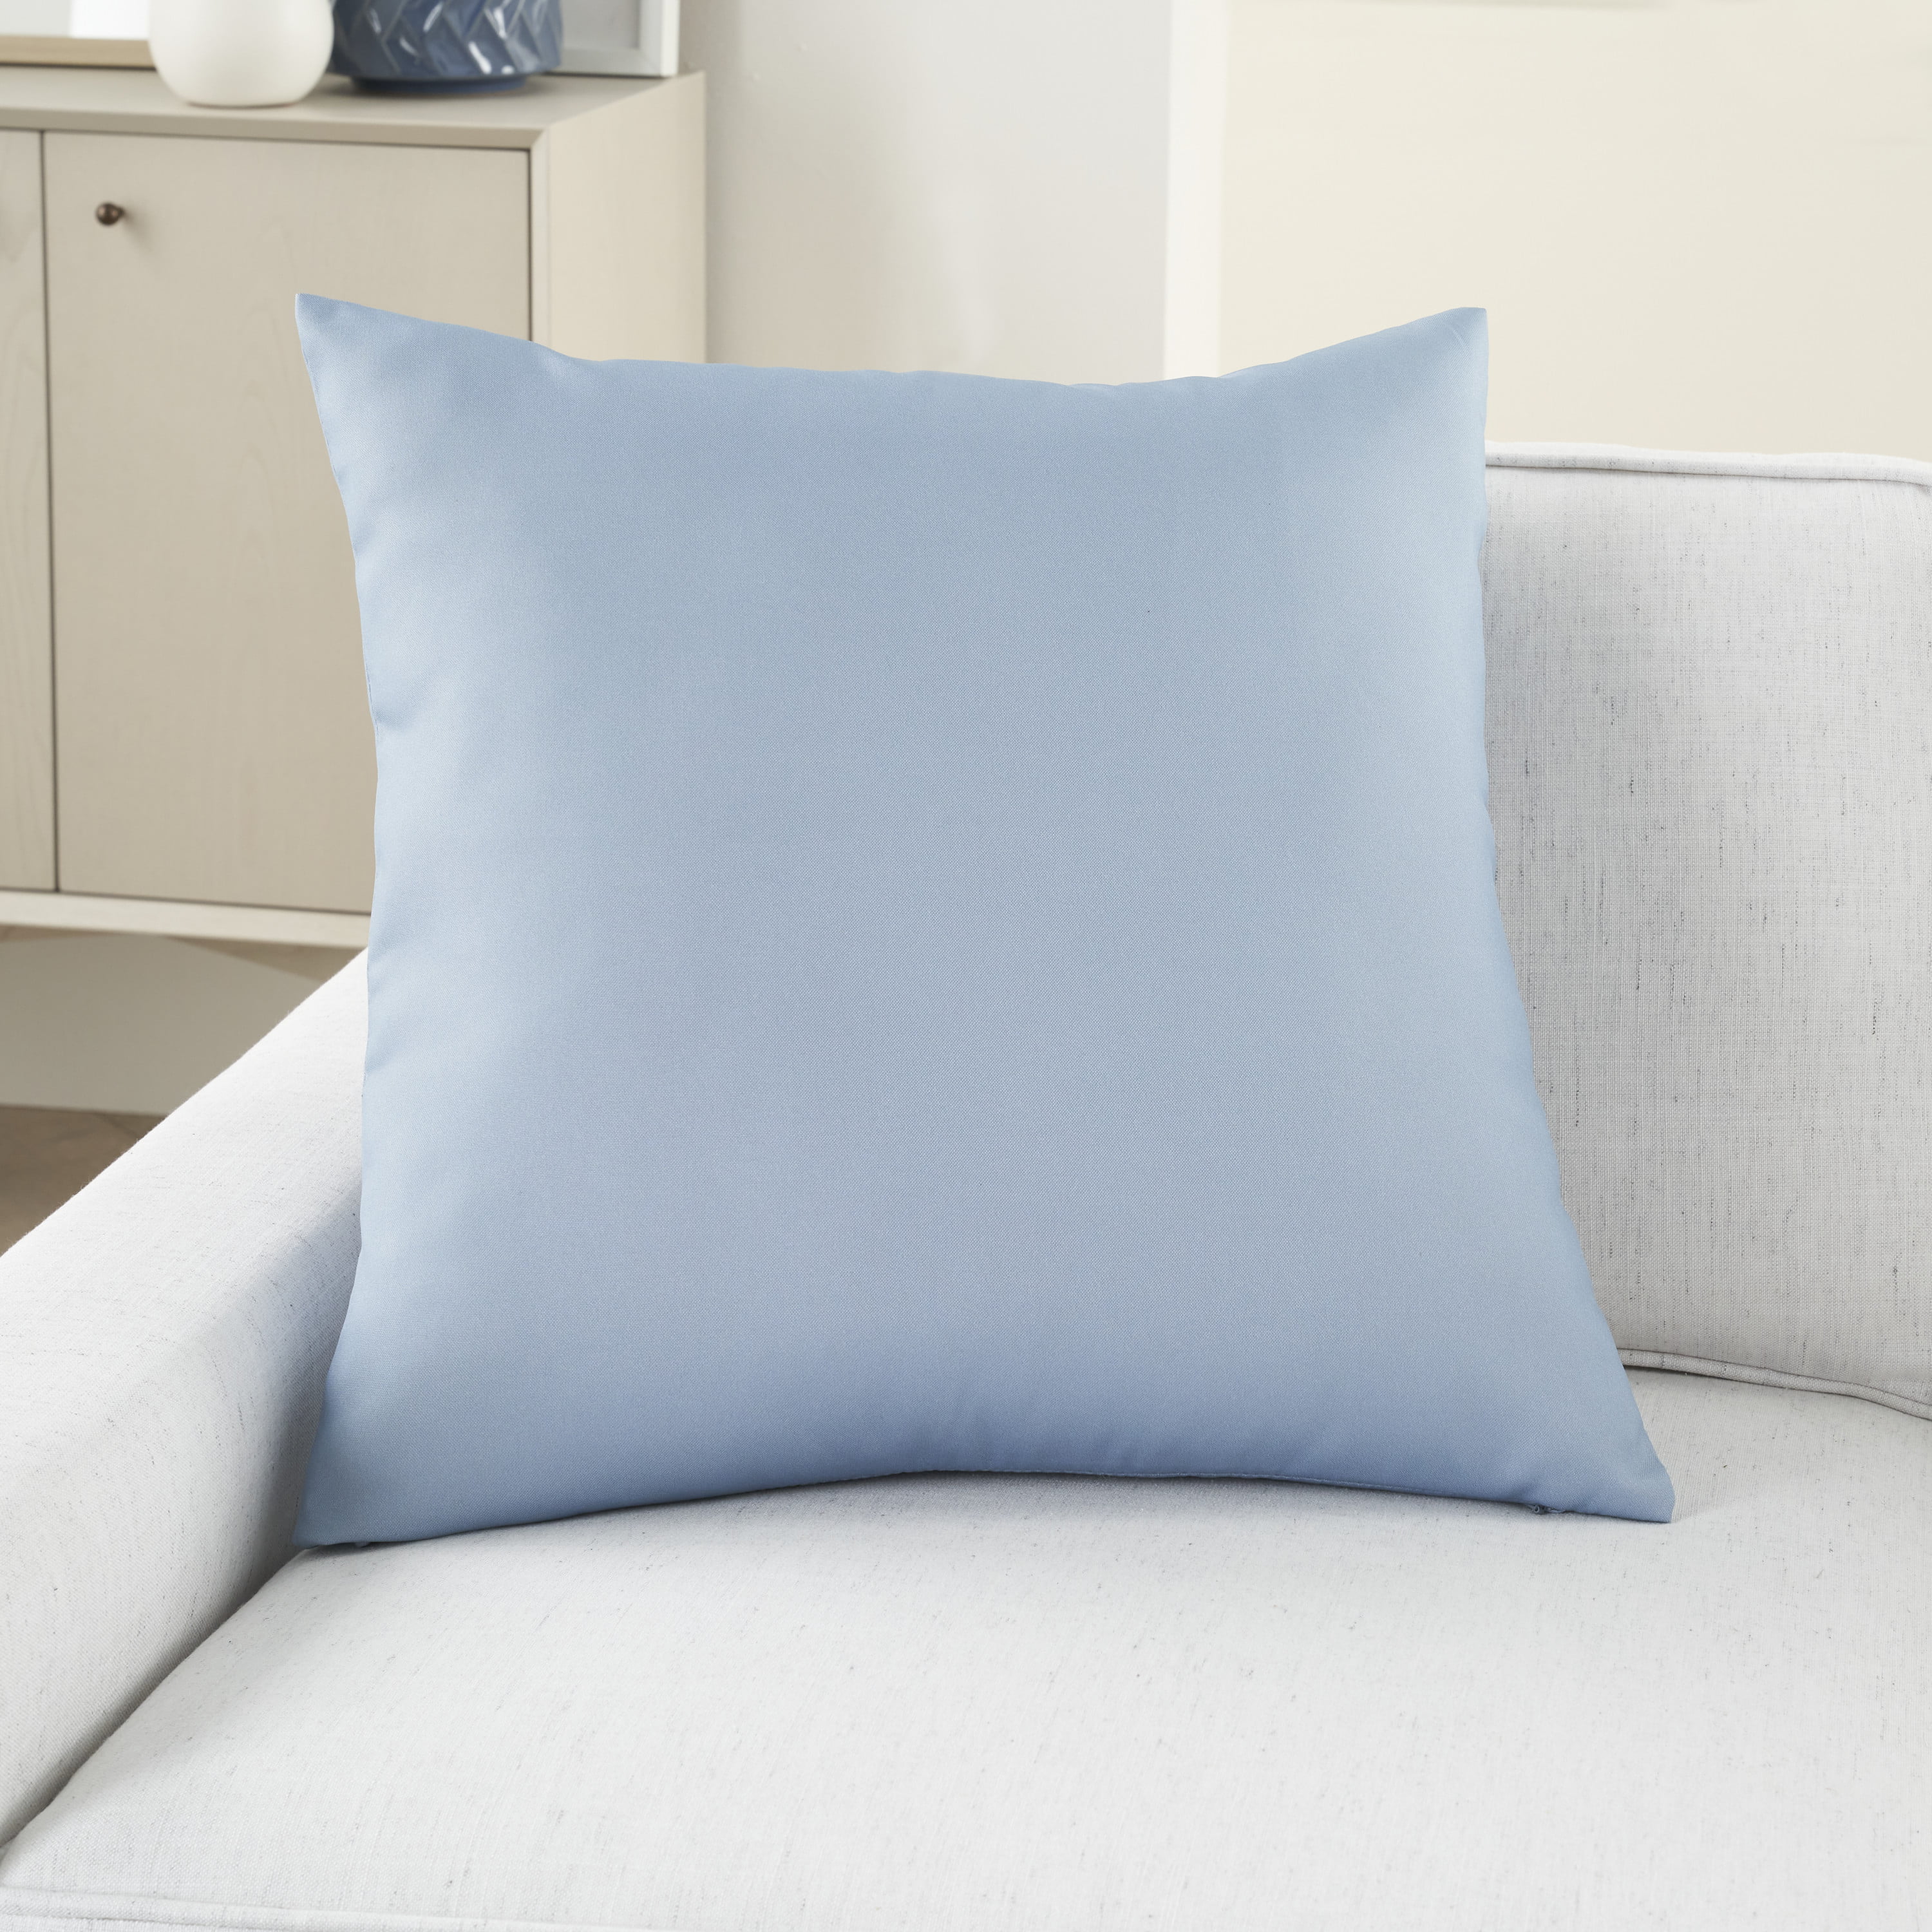 Waverly Solid 20 inch x 20 inch Navy Indoor/Outdoor Throw Pillow